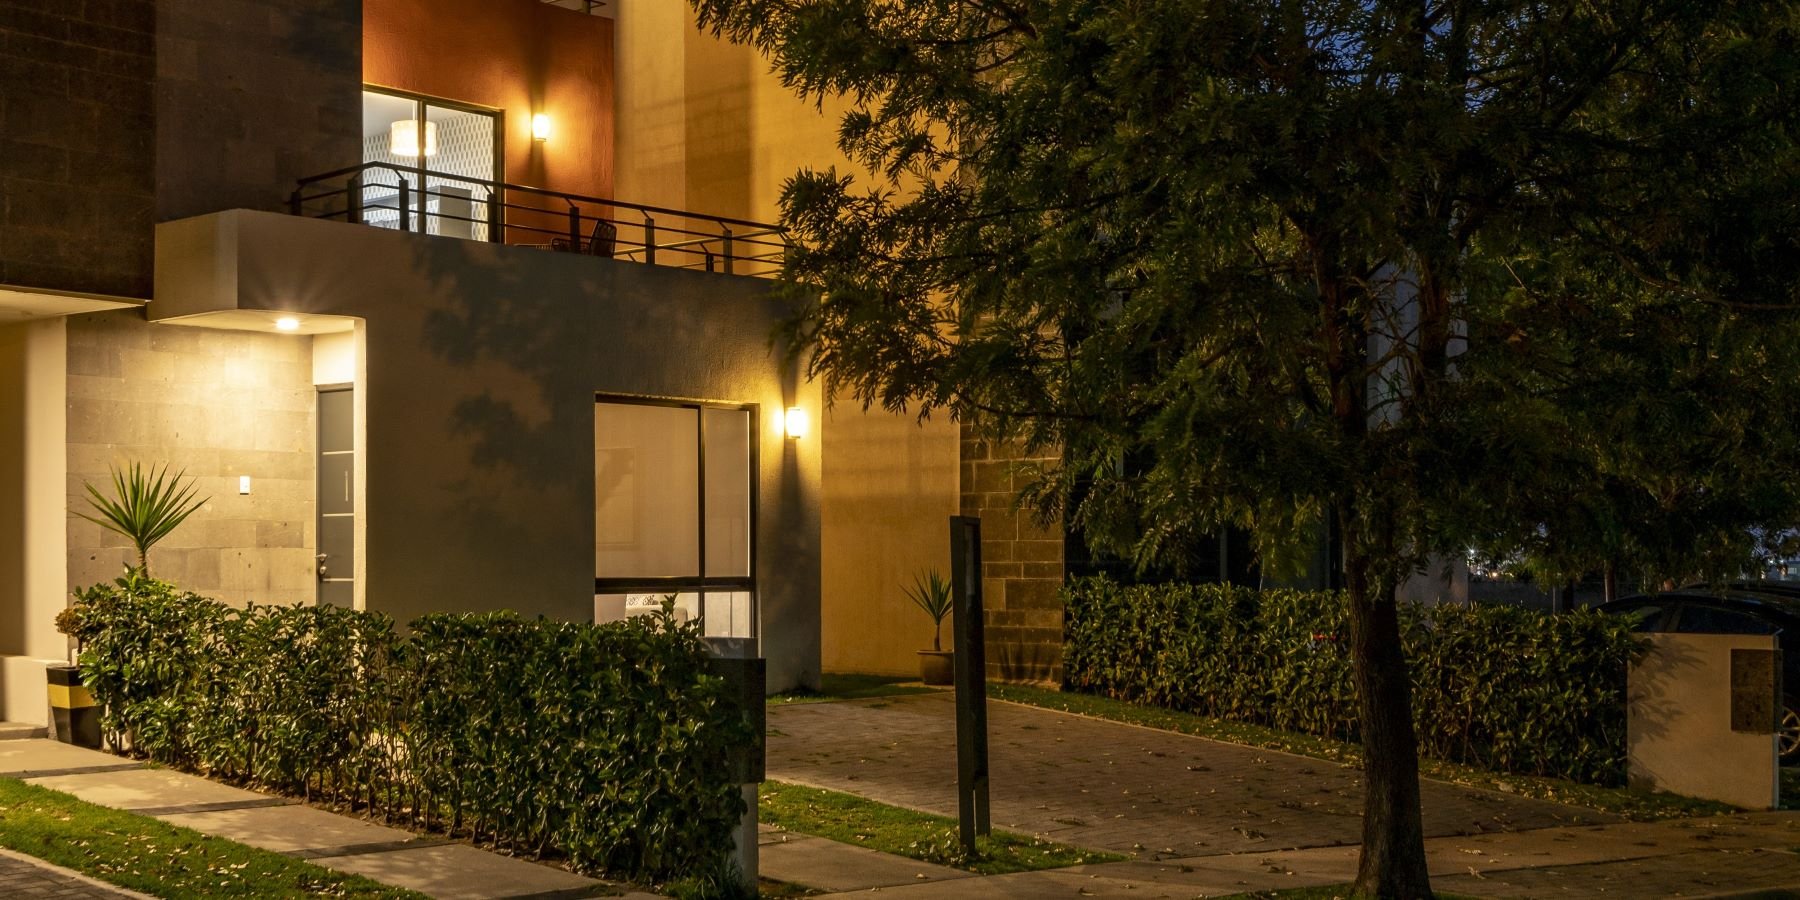 Casa en Villas del Campo. Naturaleza, arbustos e iluminación nocturna para vivir tranquilamente.